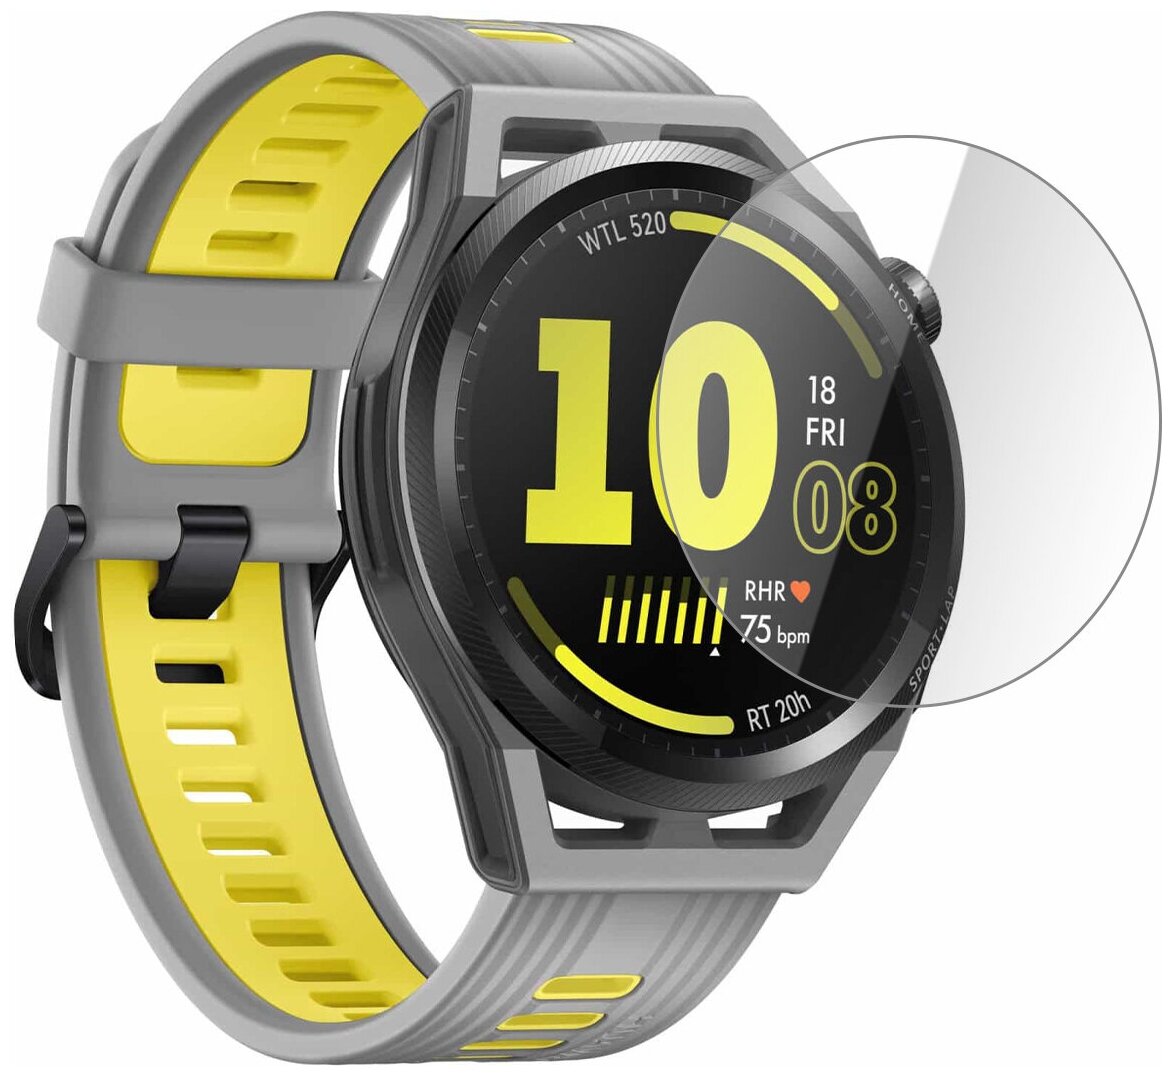 Матовая защитная плёнка для смарт-часов Huawei Watch GT Runner, гидрогелевая, на дисплей, не стекло